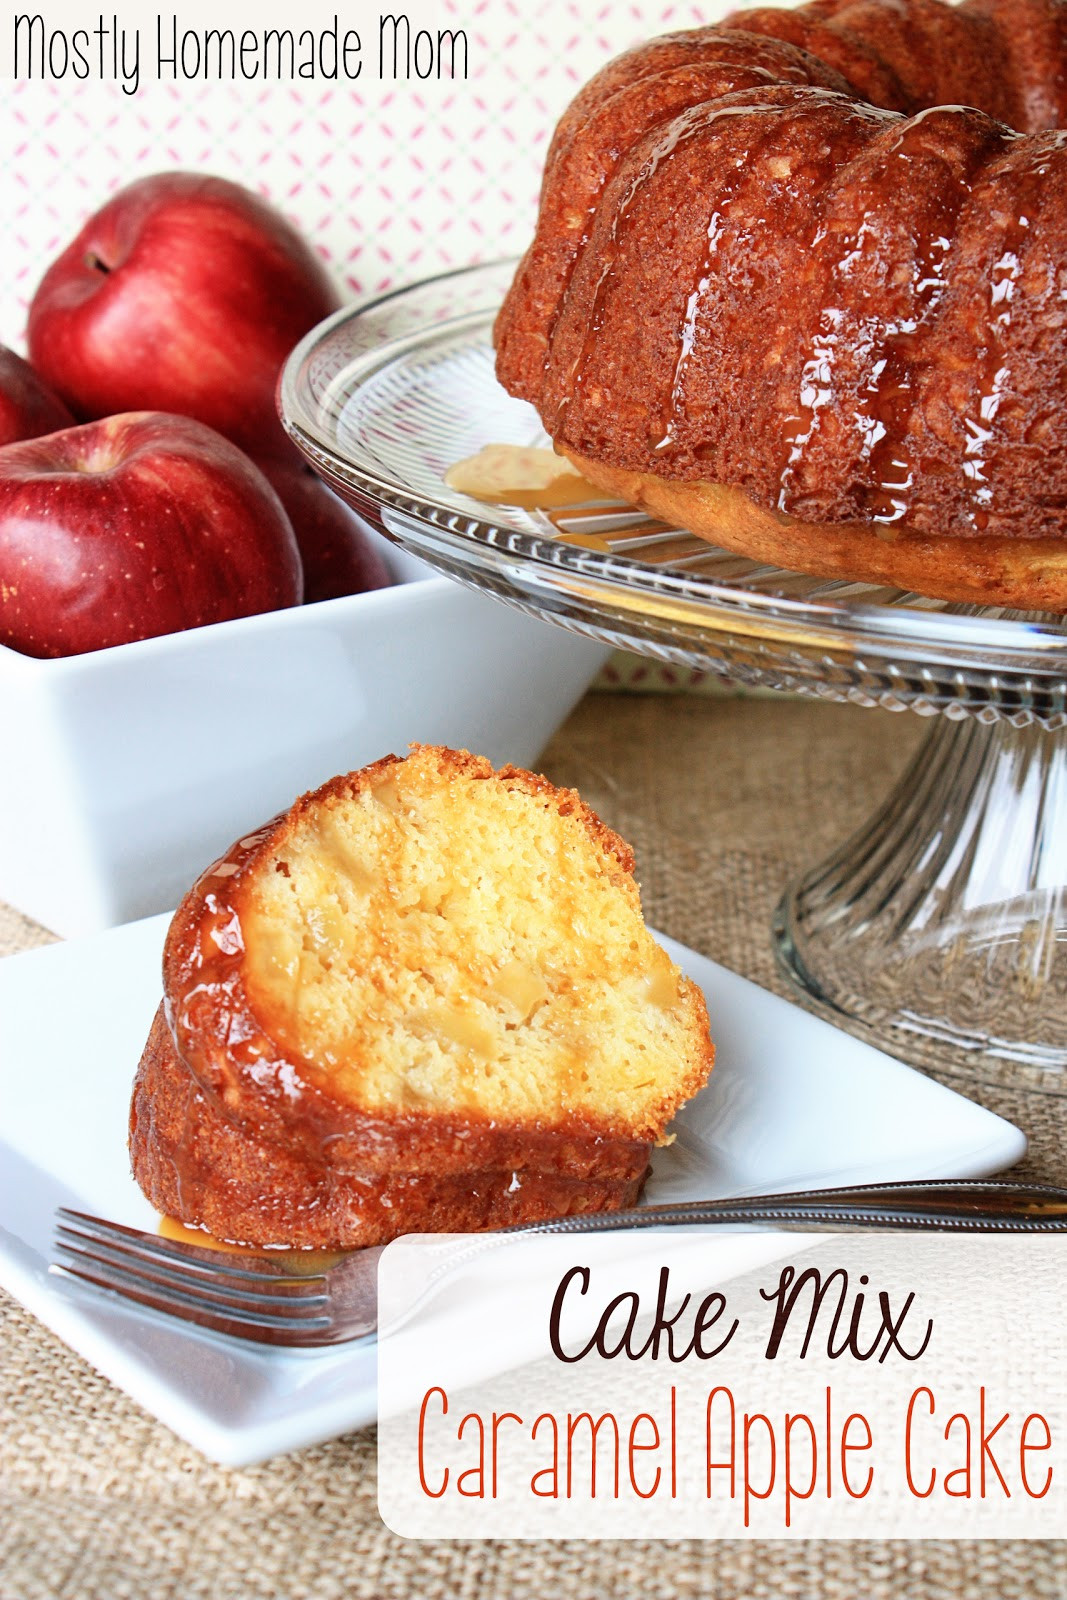 Apple Cake With Cake Mix
 Cake Mix Caramel Apple Cake Mostly Homemade Mom